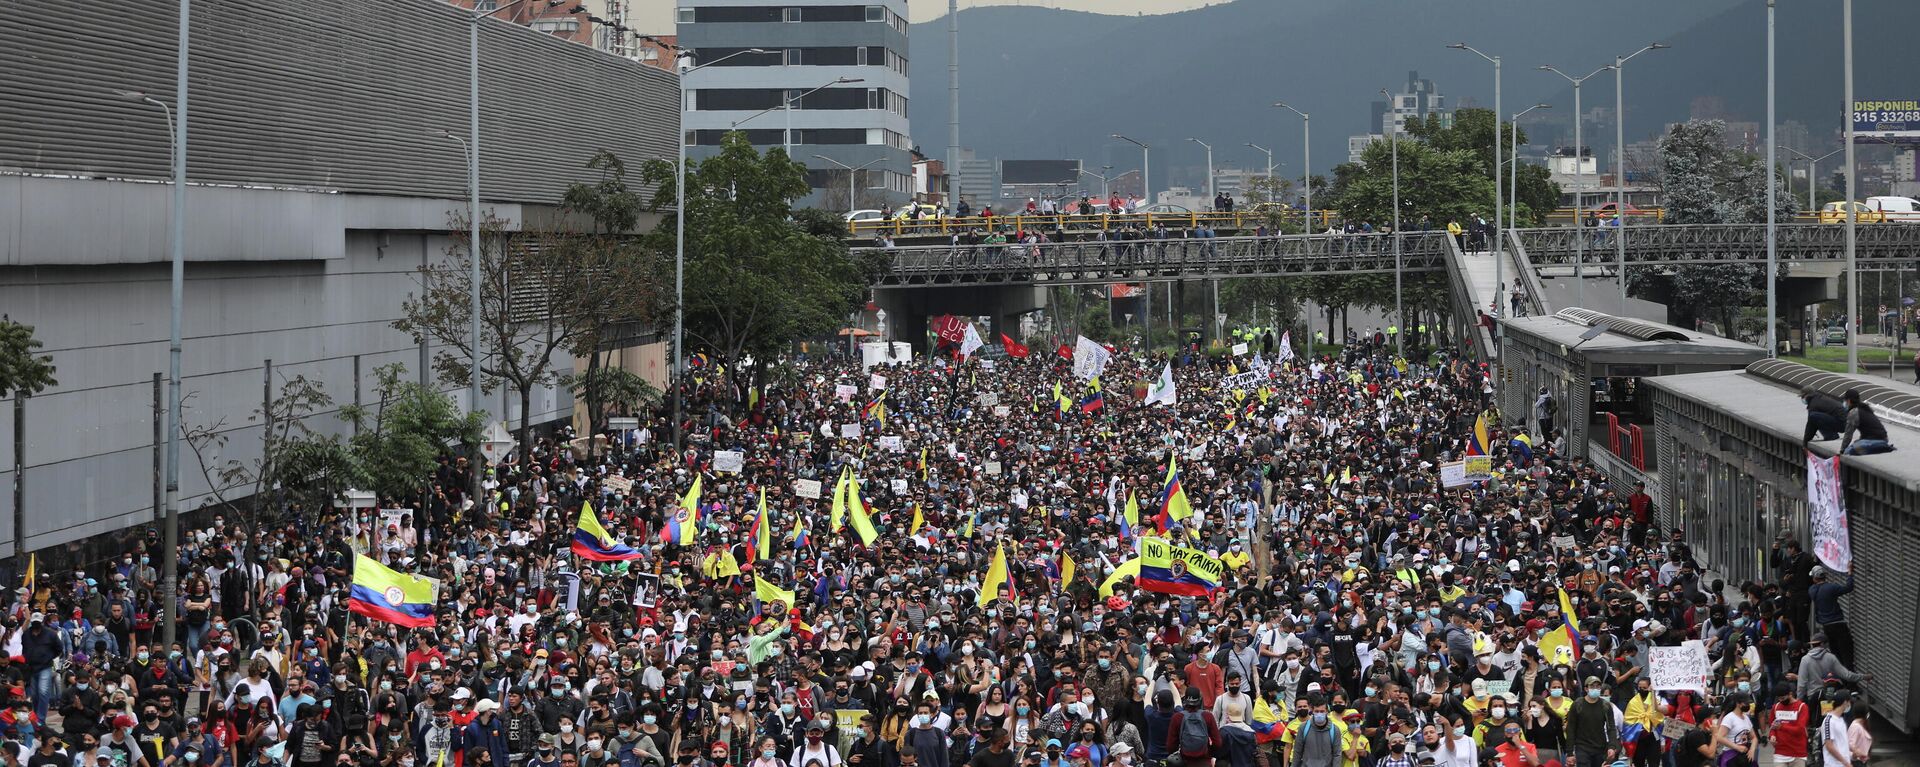 Protest en Colombia - Sputnik Mundo, 1920, 28.04.2021